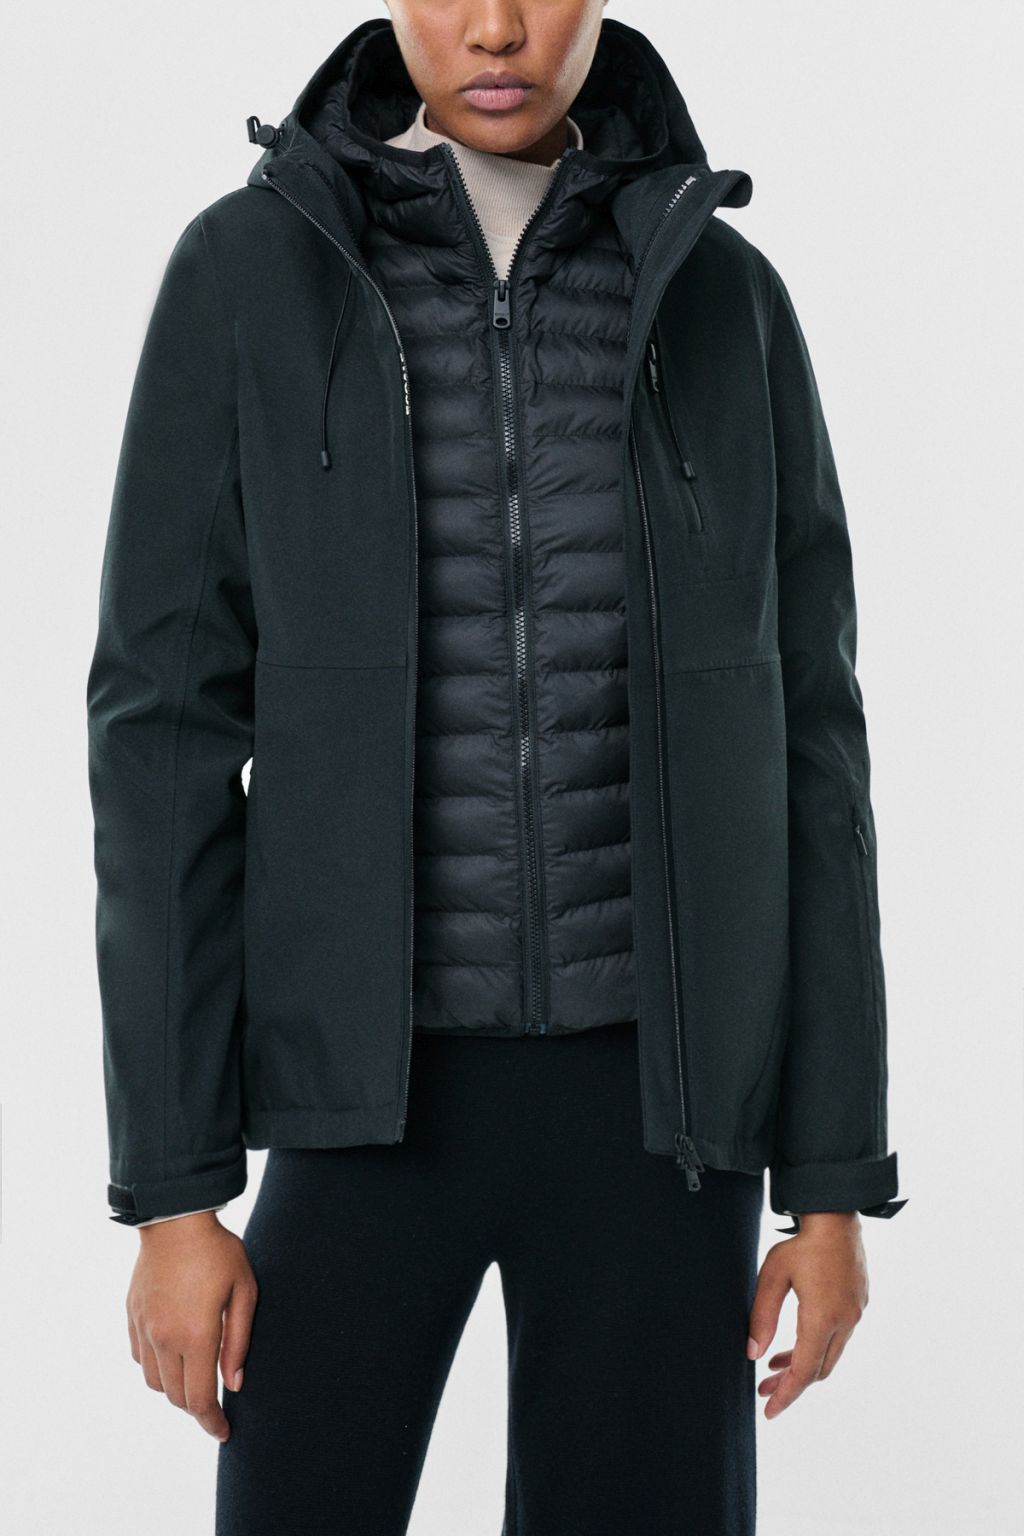 Mandualf Jacket Woman Black XL